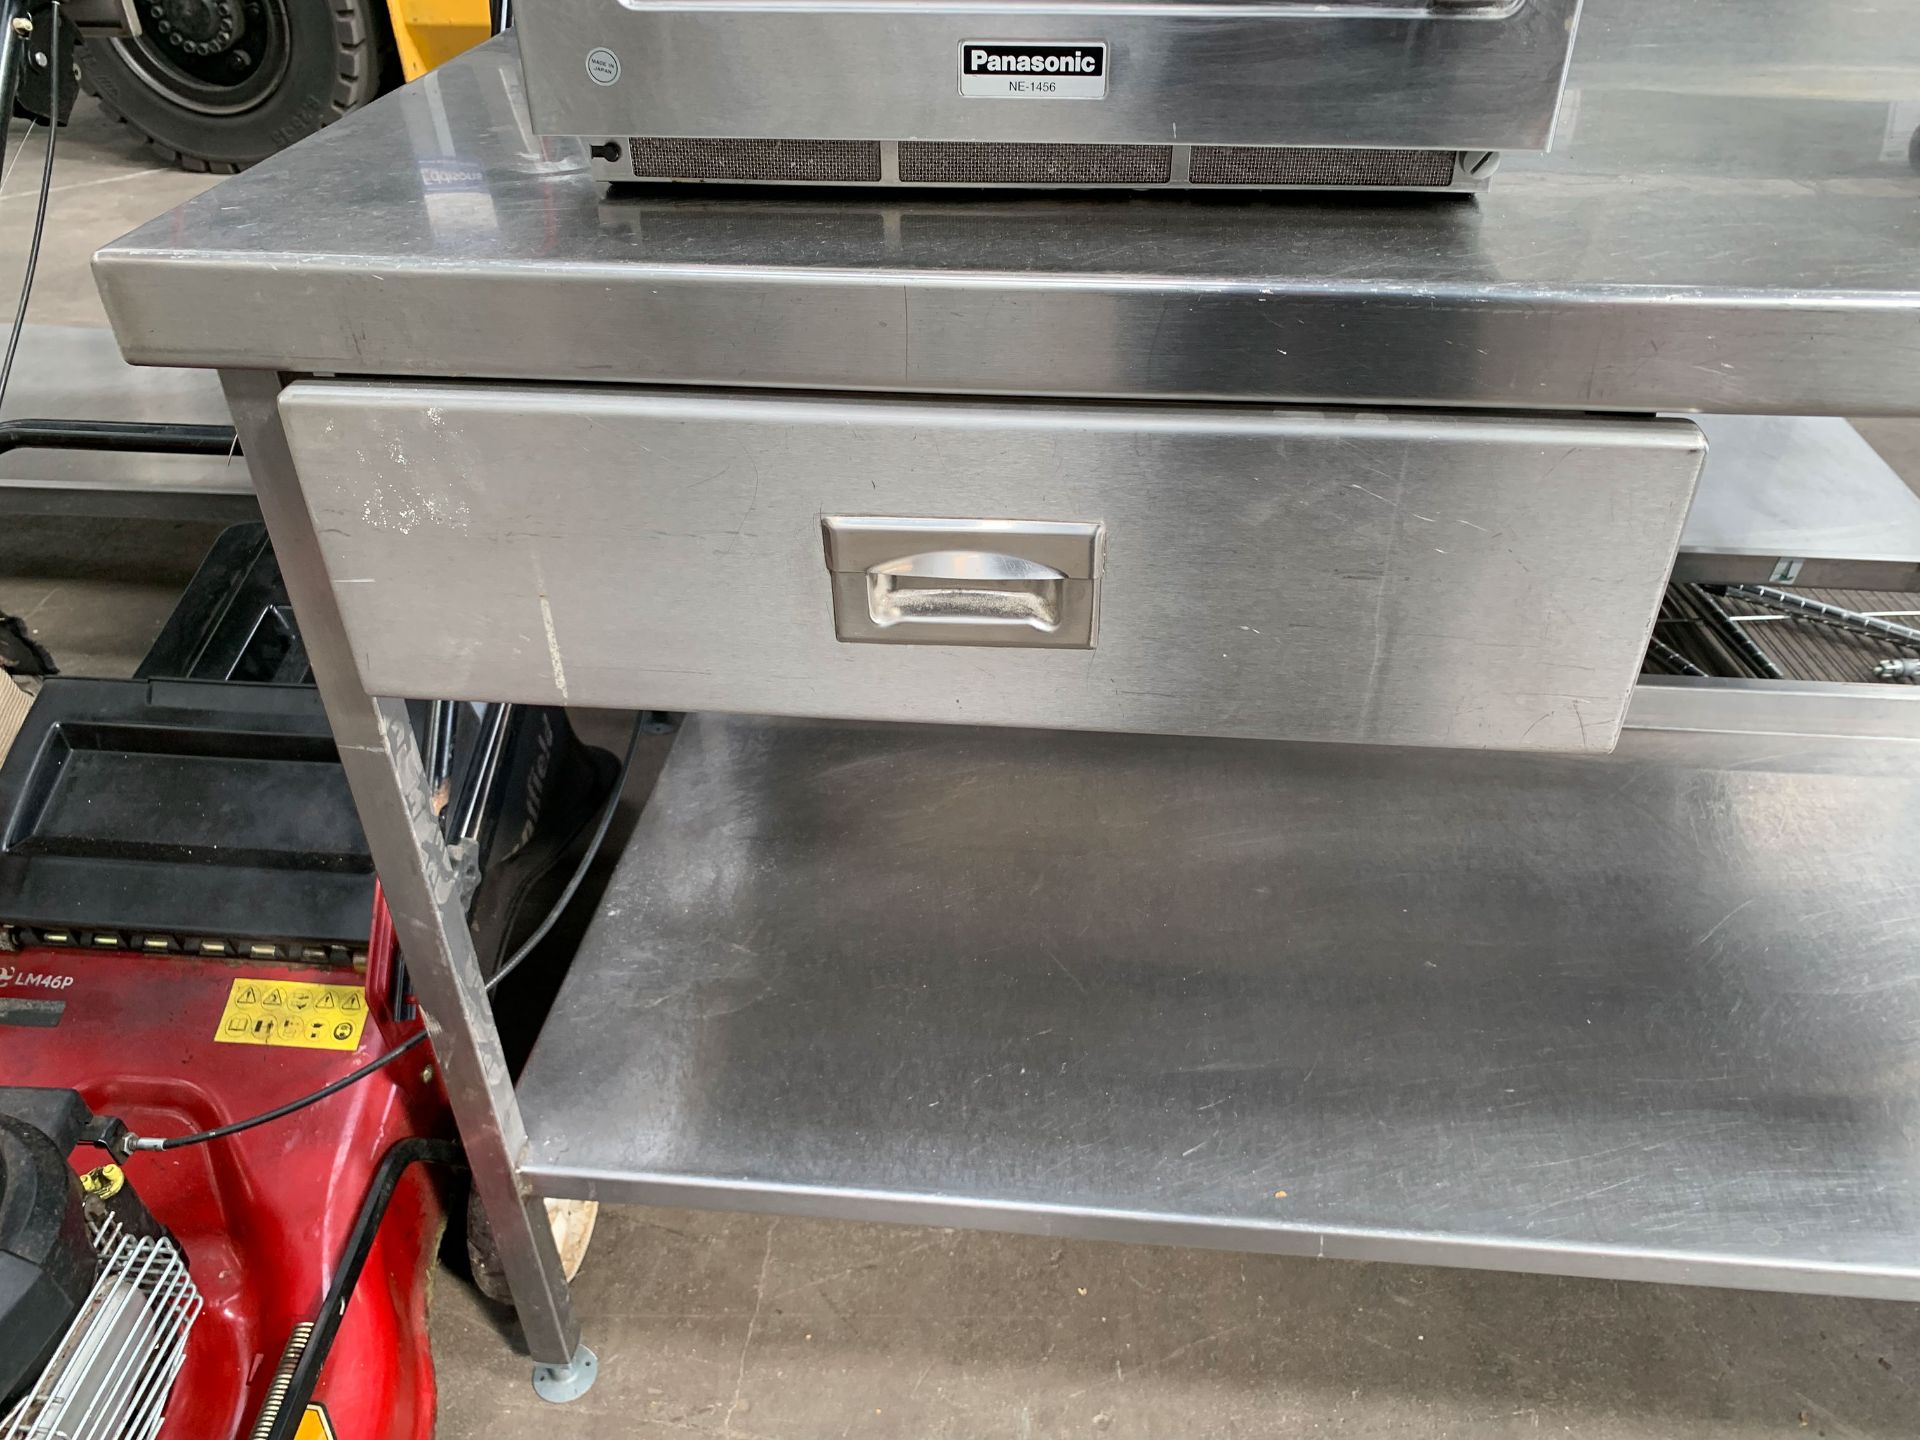 2-tier Stainless Steel Prep Table with Splashback, Adjustable Feet & Single Drawer - Image 2 of 2